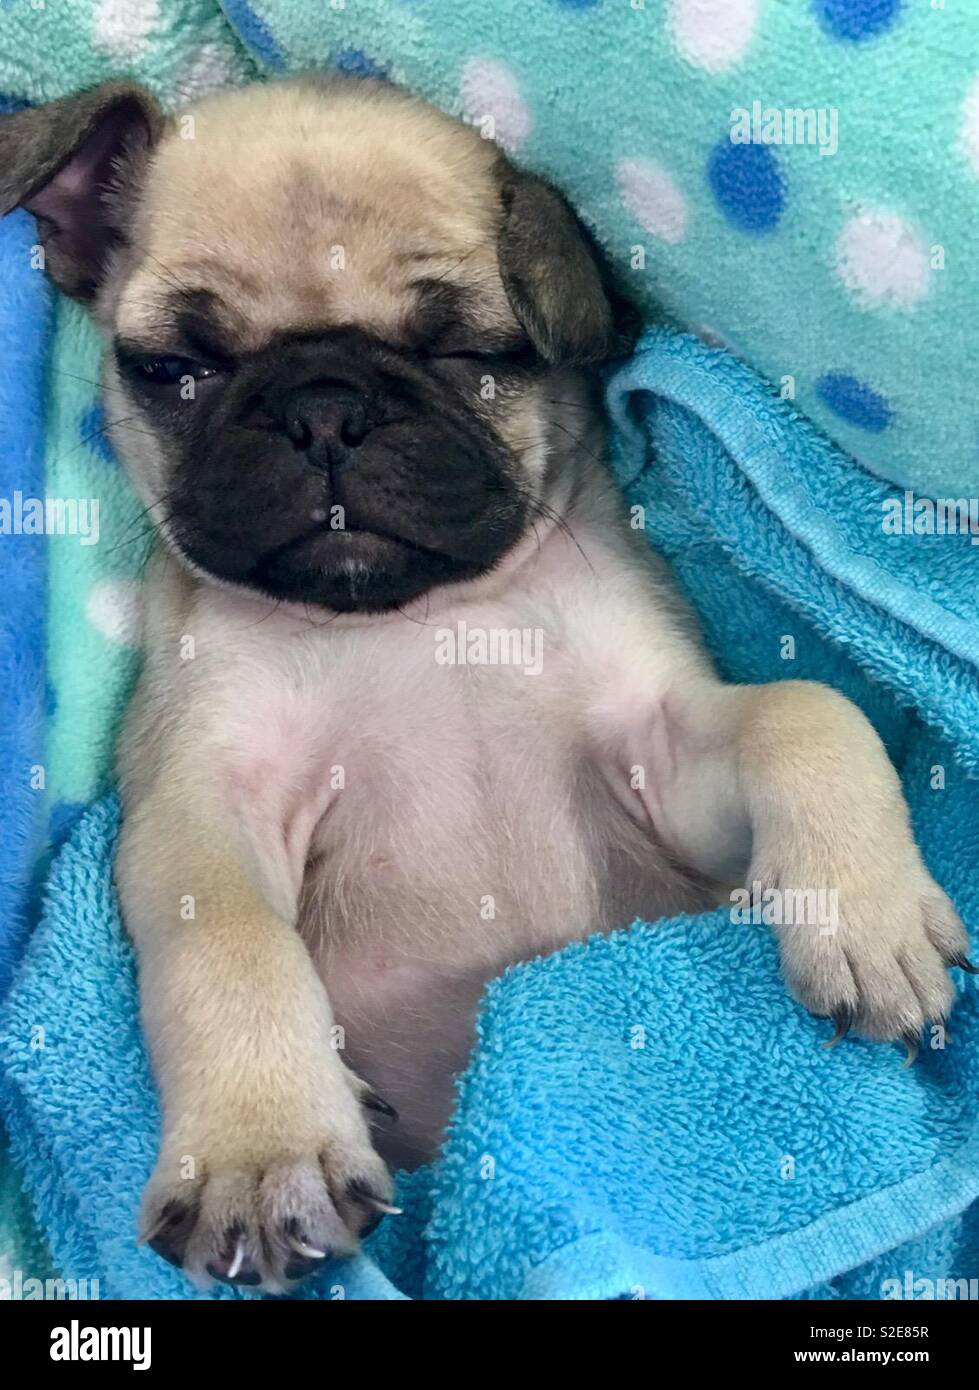 Sleepy Pug puppy Stock Photo - Alamy